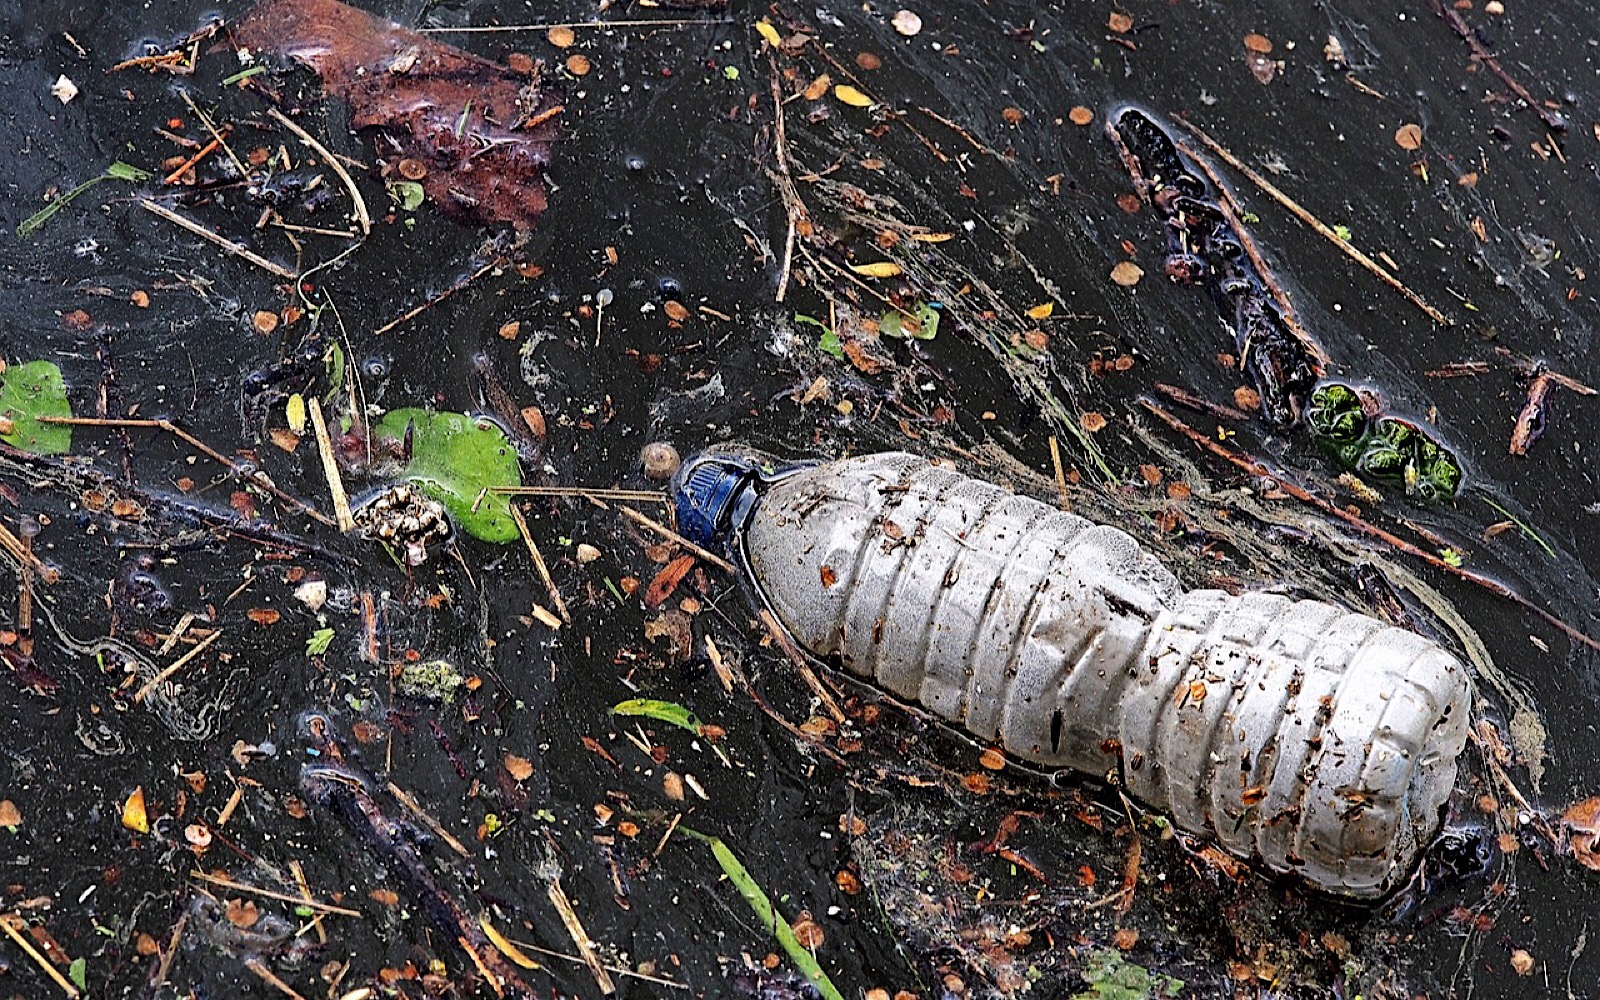 Plastic bottle on the ground